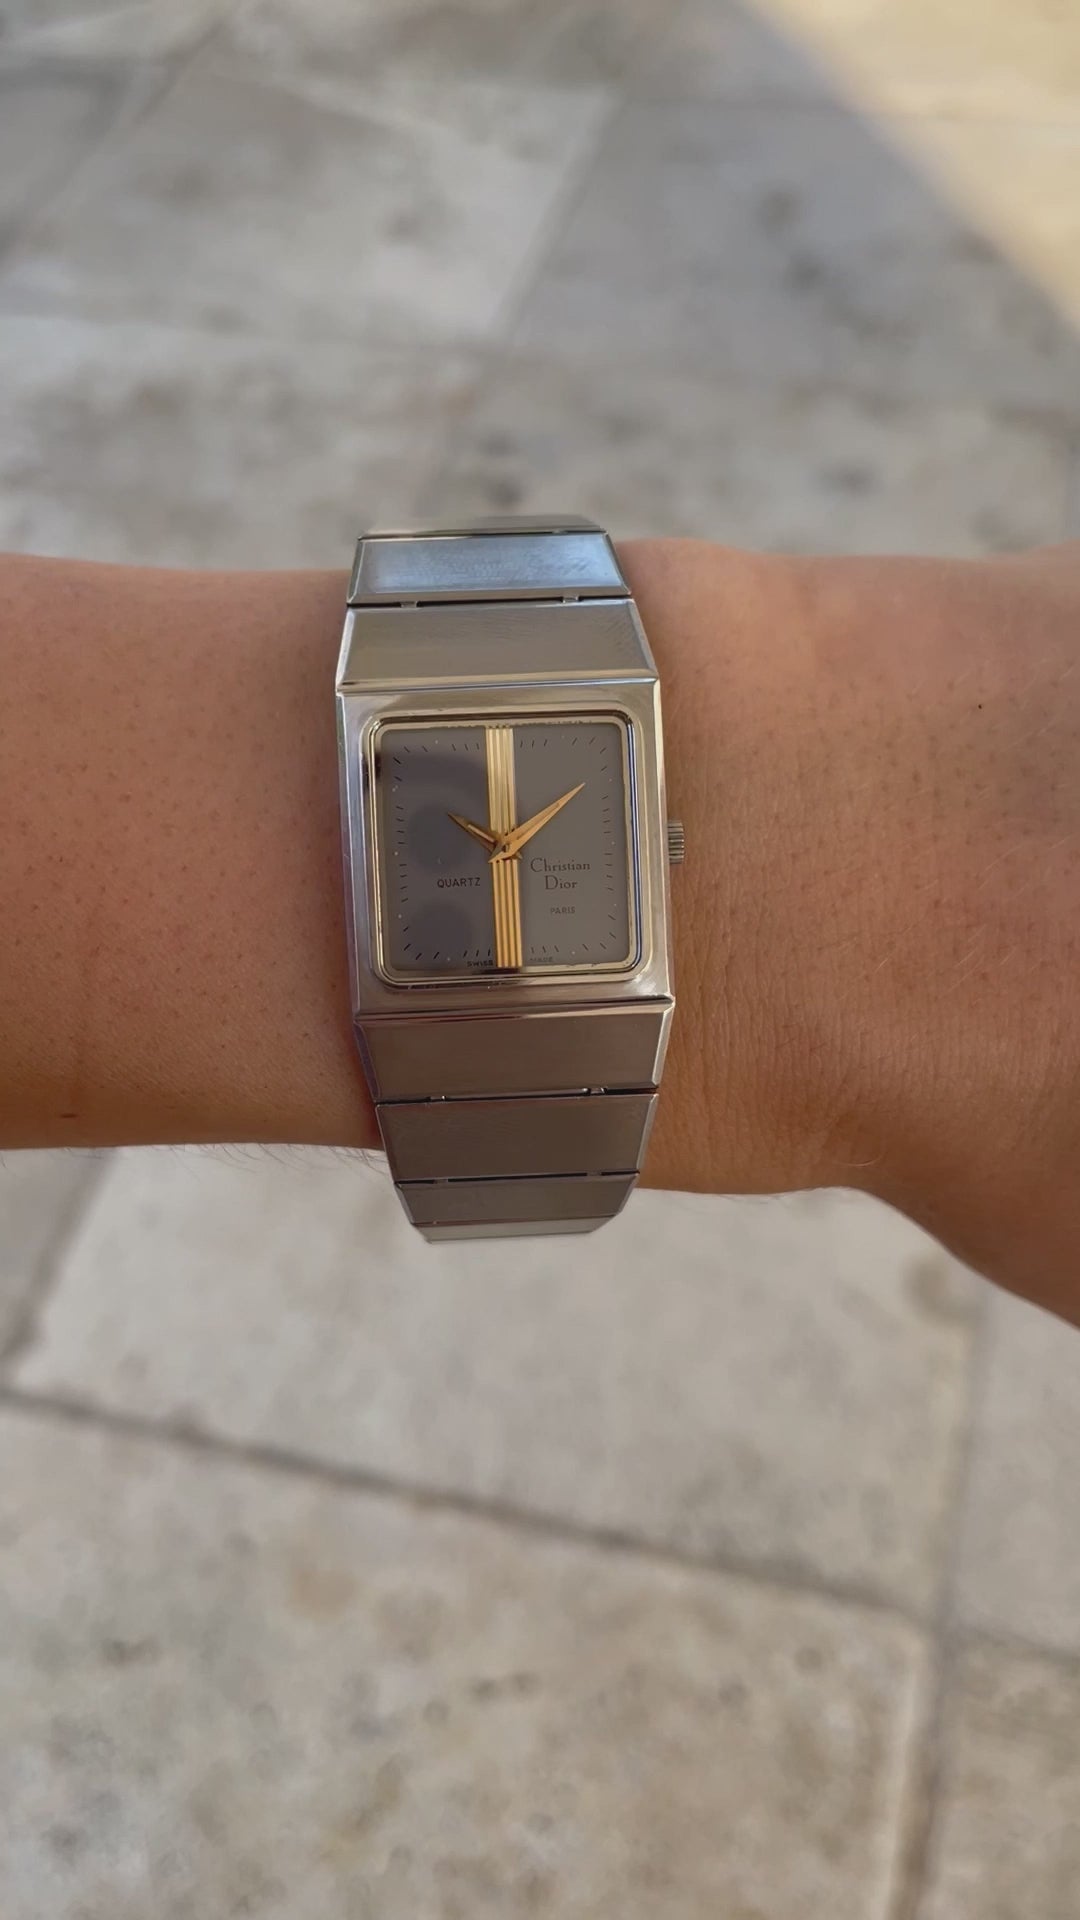 Christian Dior Vintage Ladies Watch: 90s Golden, Steel Bracelet| Wrist Shot Video